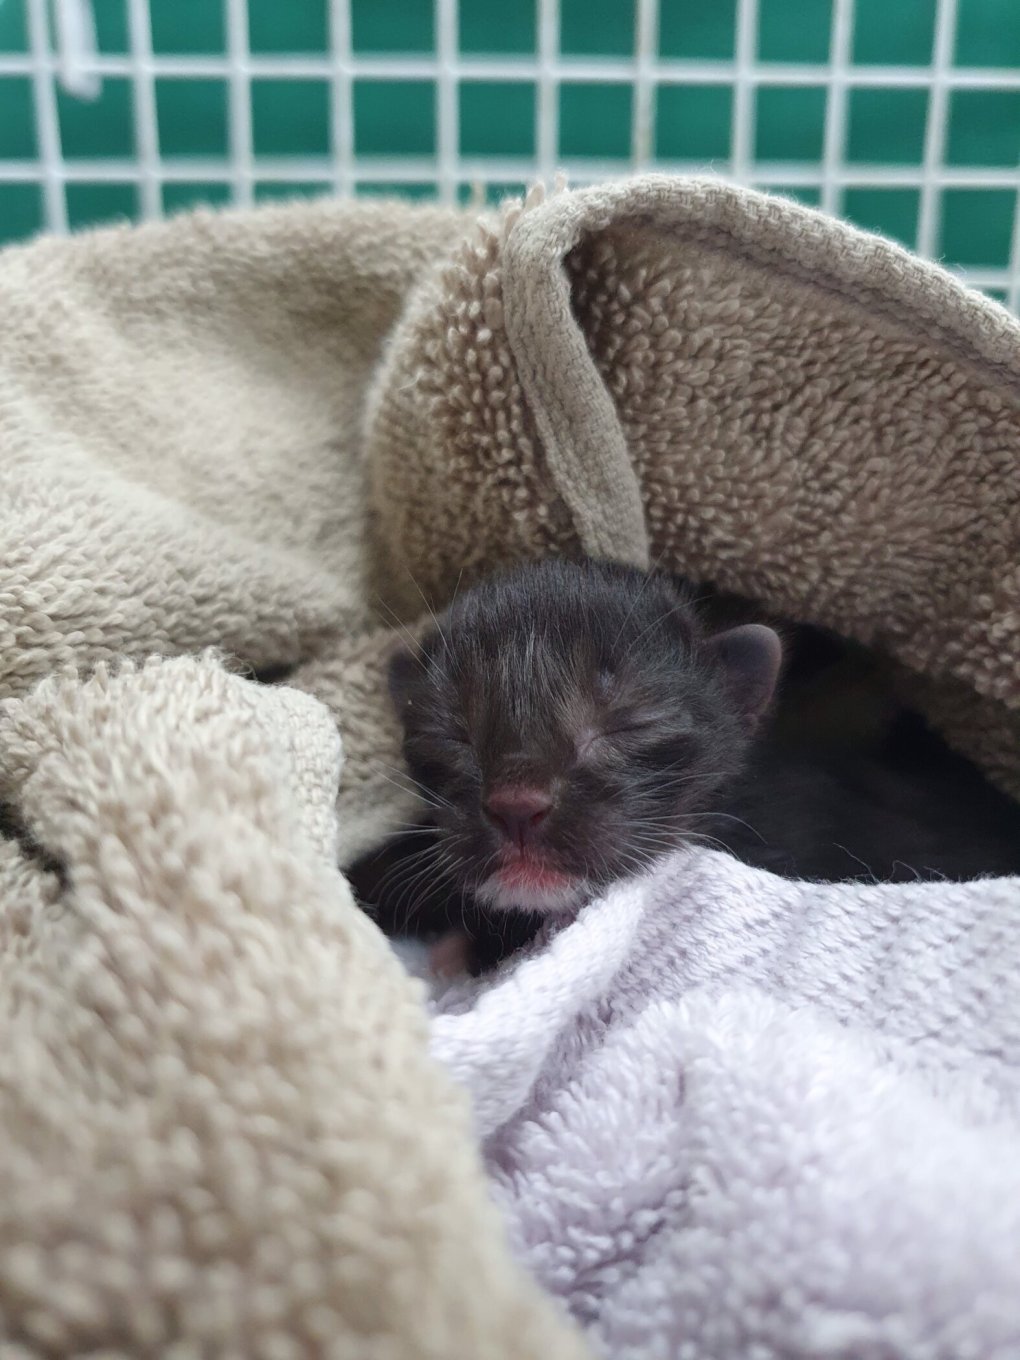 RSPCA Rescued one Day old Kitten Found Alone in Dulwich Garden